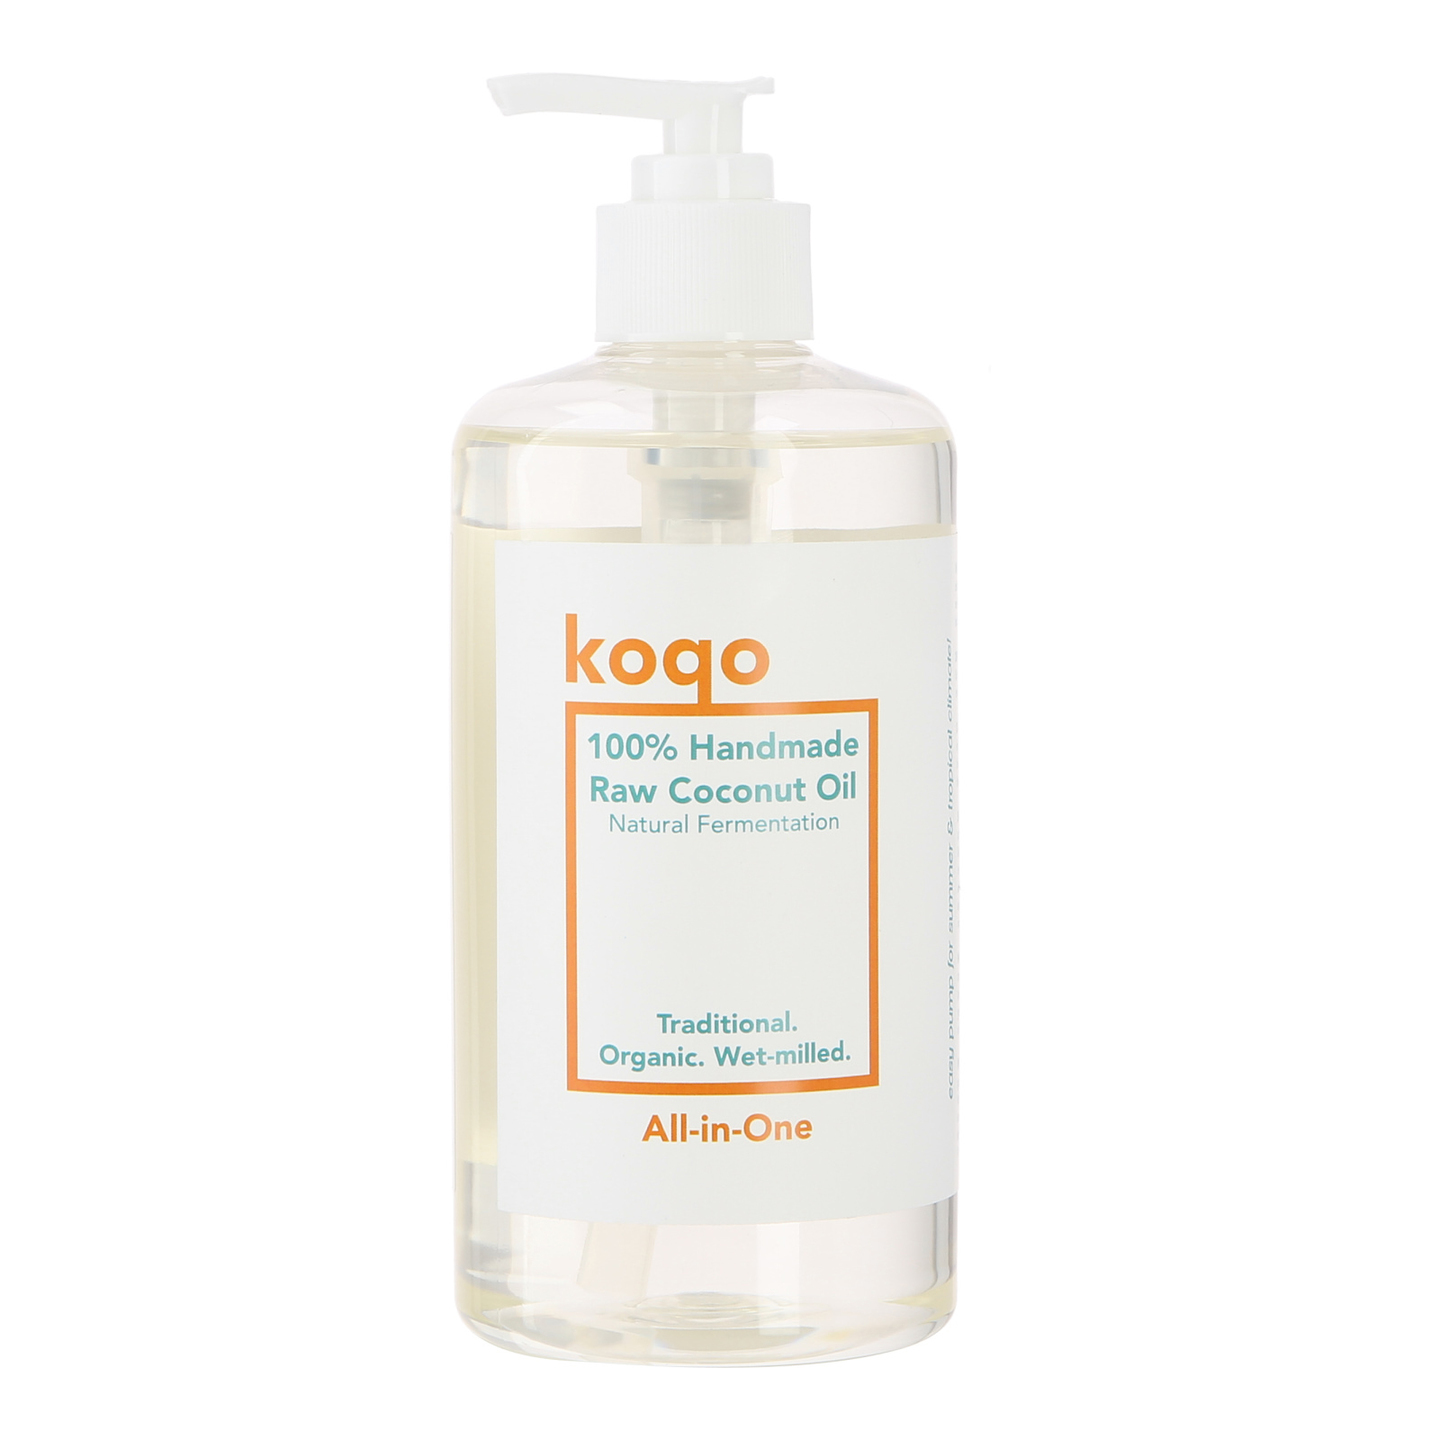 koqo All-In-One 100 Pure Handmade Virgin Coconut Oil 500ml - Best Value